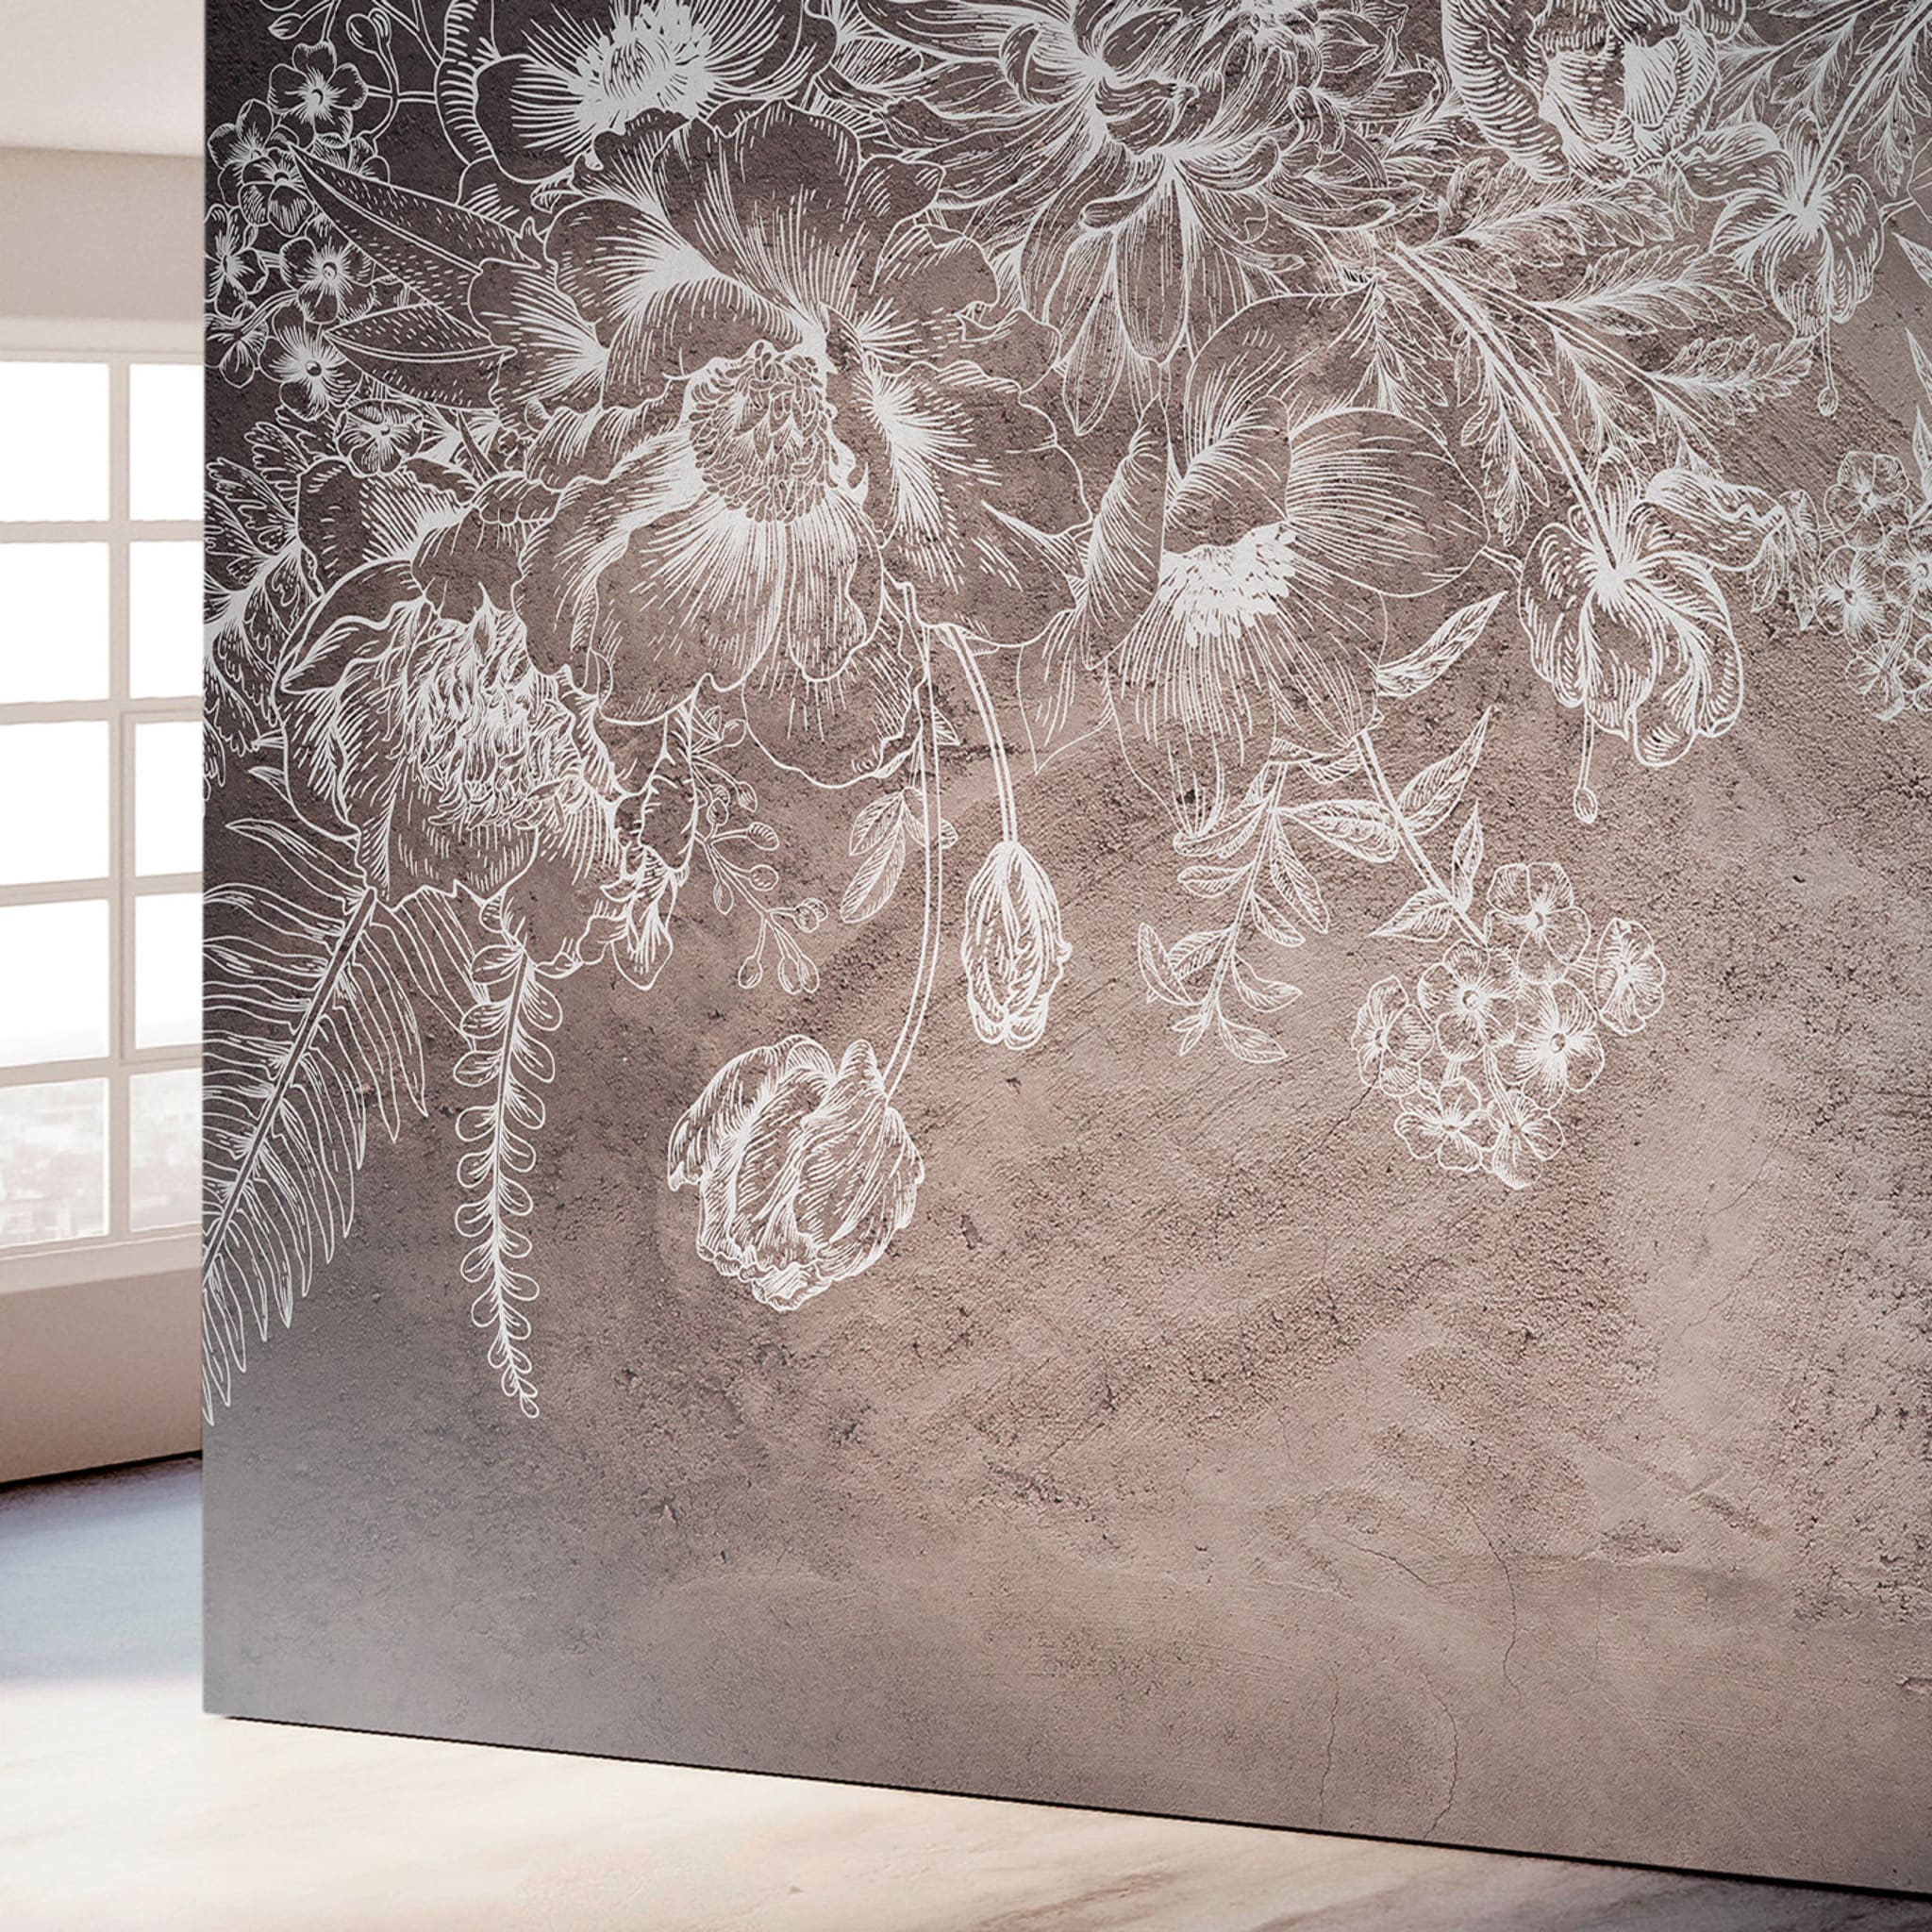 Flower Abstract textured wallpaper - Alternative view 1